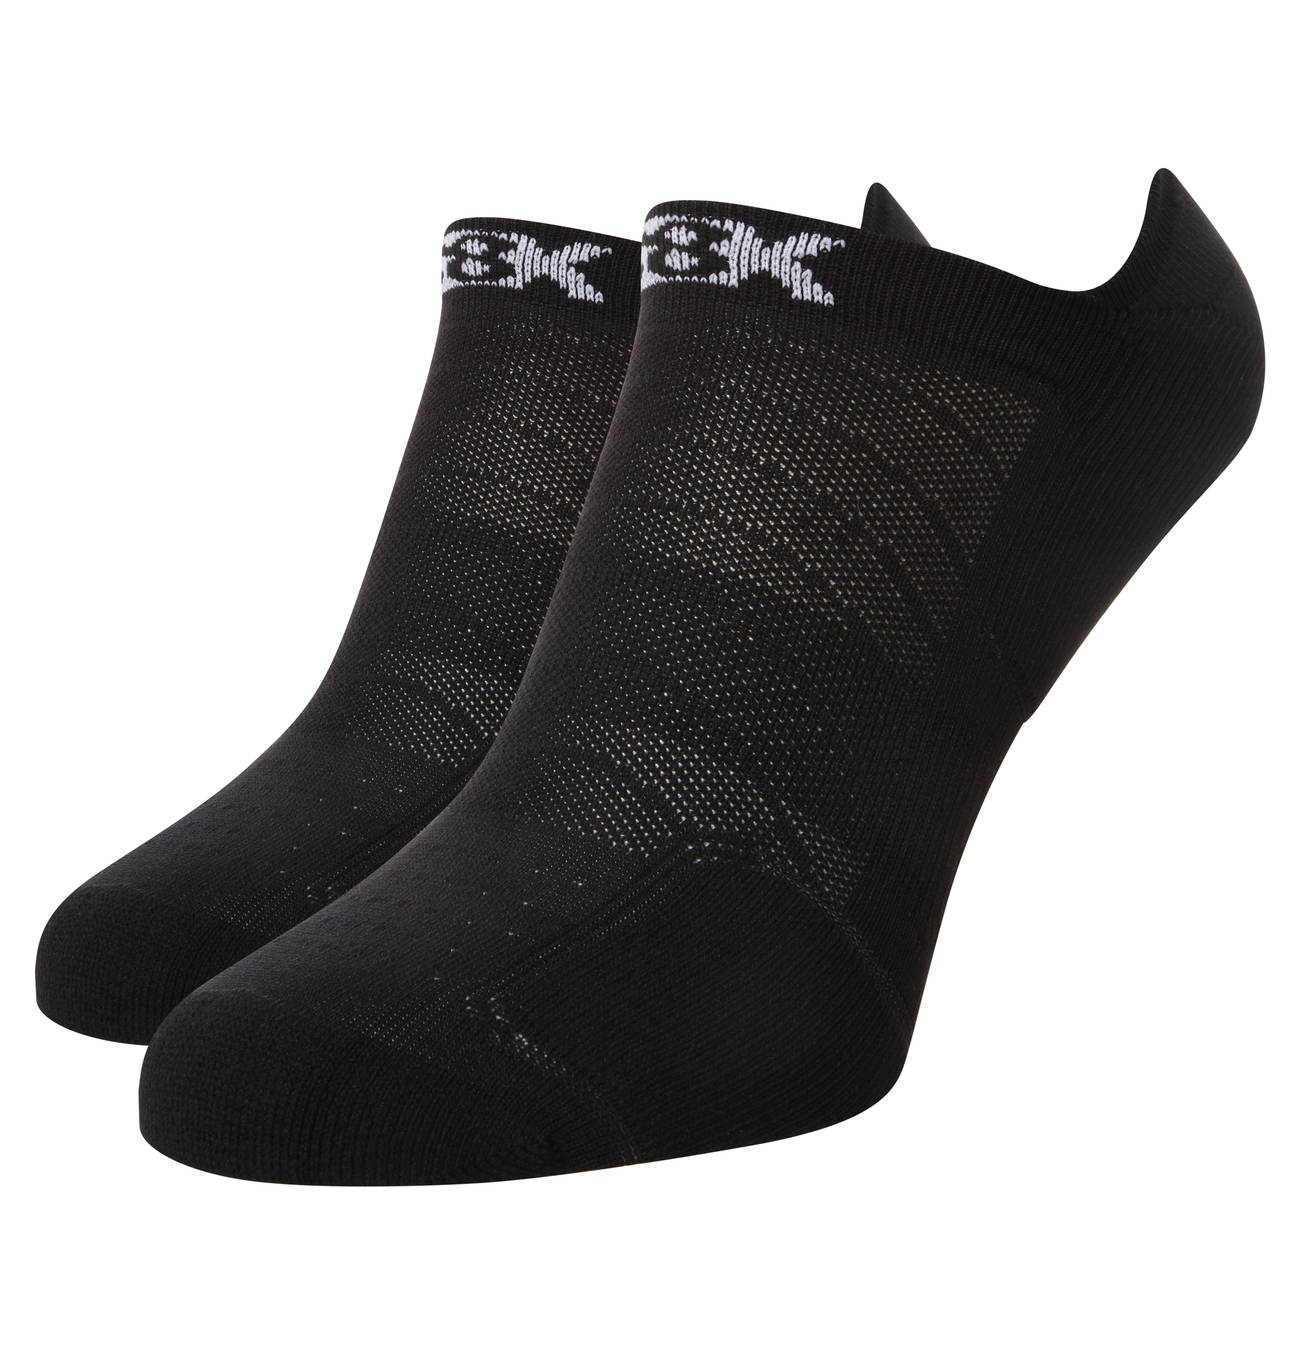 Größe EU 39-41 Farbe Black Uni Eightsox Sneaker Merino 2-Pack Schwarz Merino Socken 